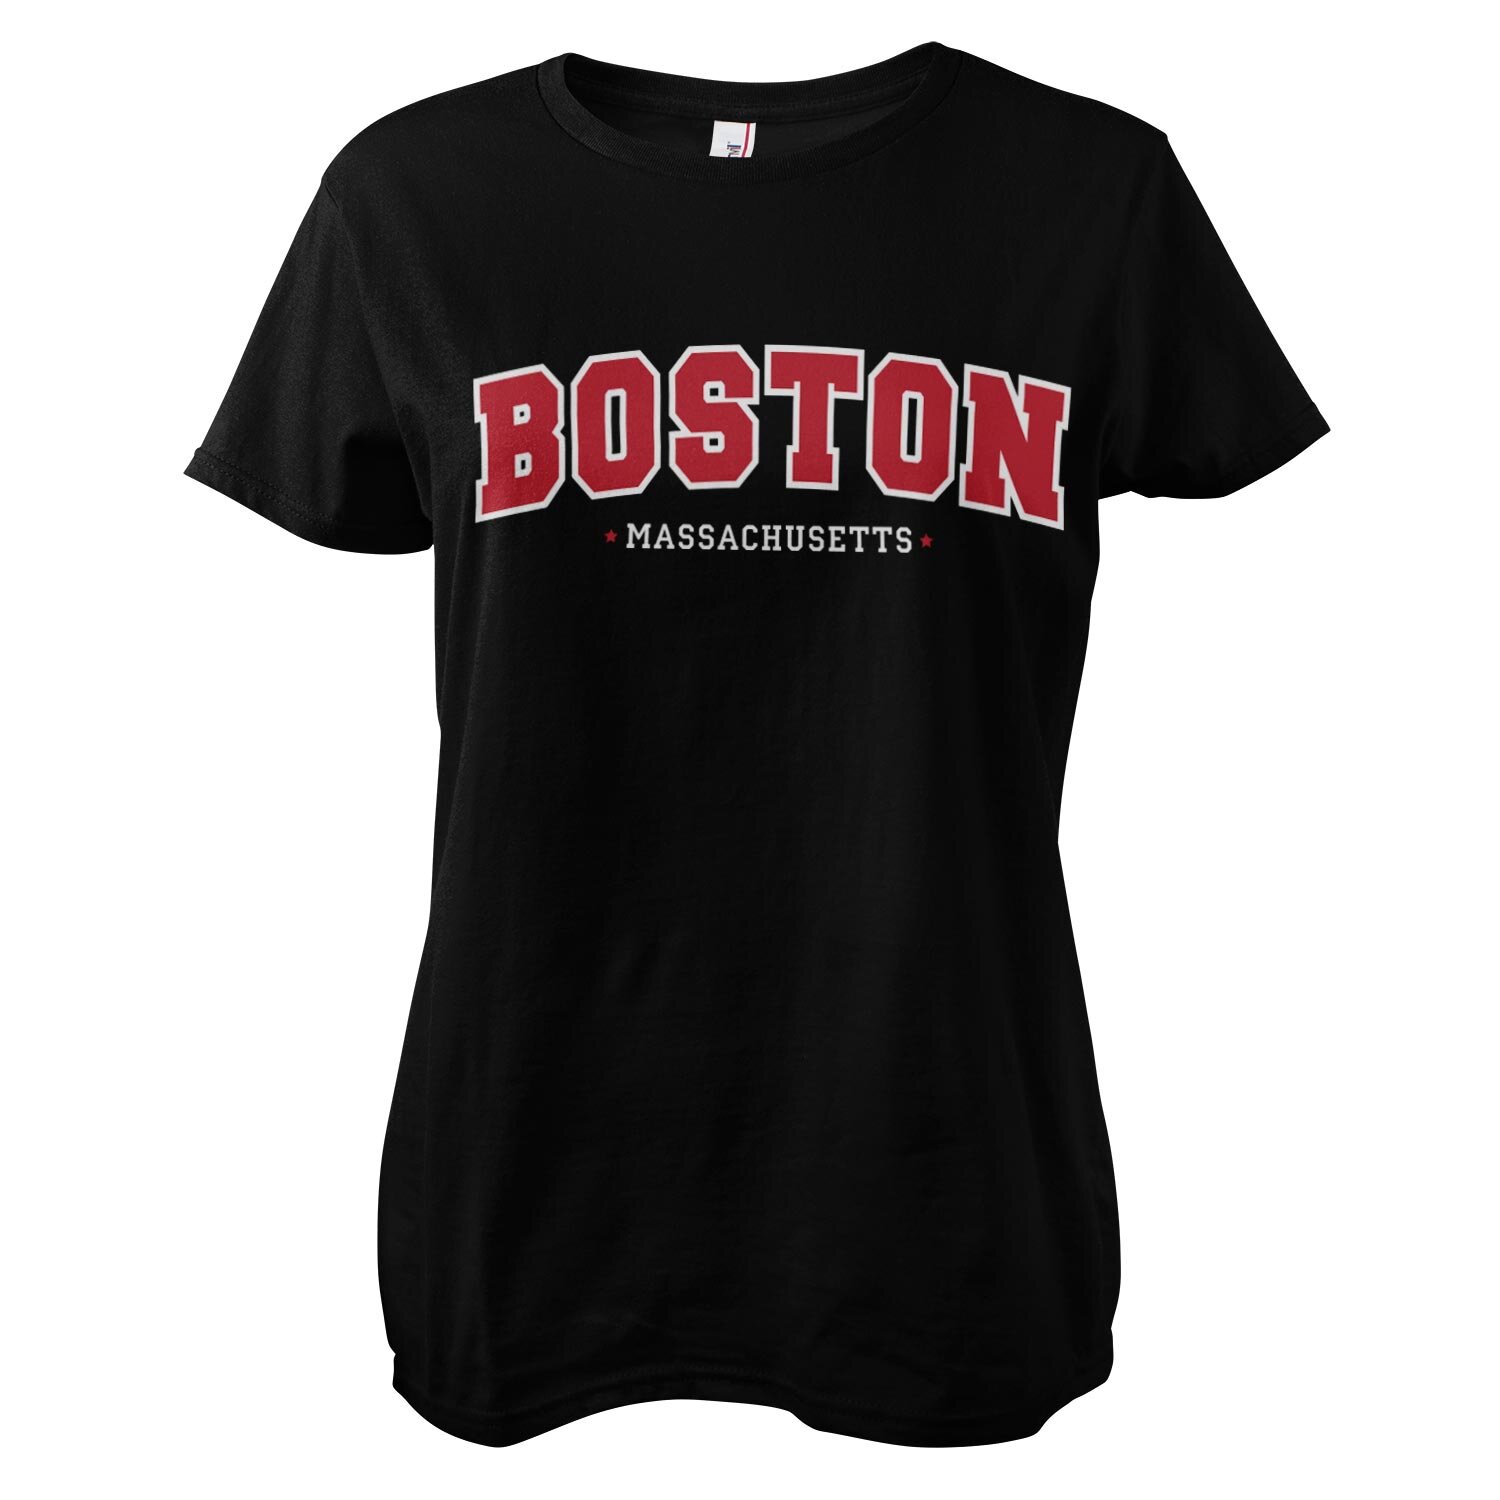 Boston - Massachusetts Girly Tee